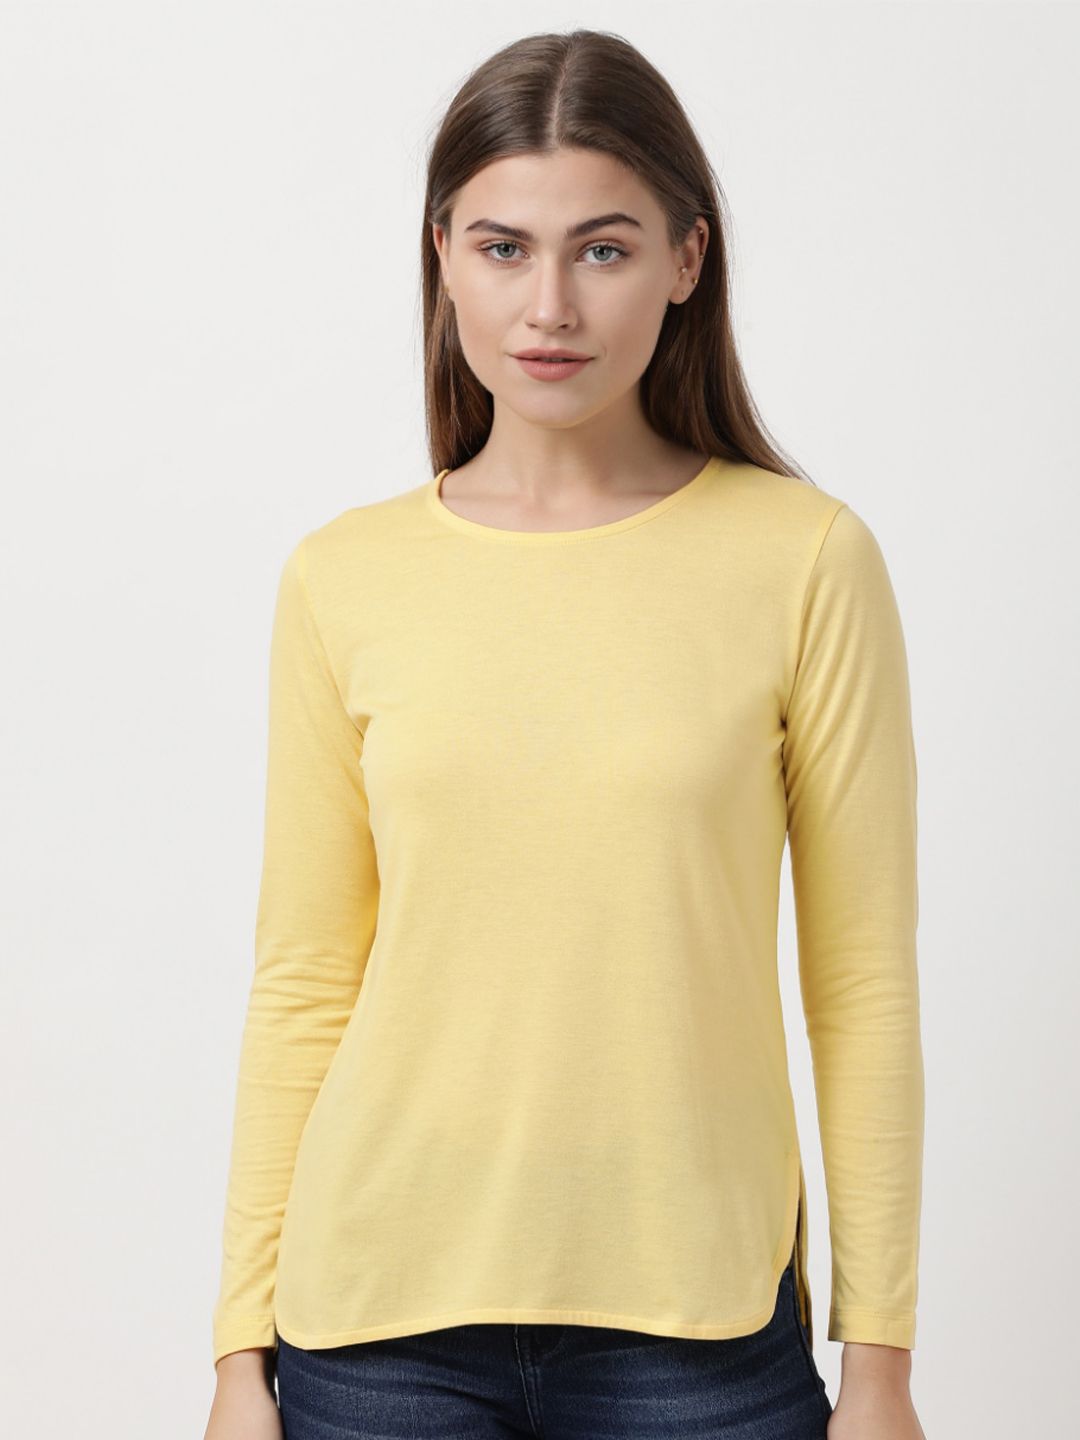 Jockey Women Yellow Solid Round Neck Lounge T-shirt Price in India